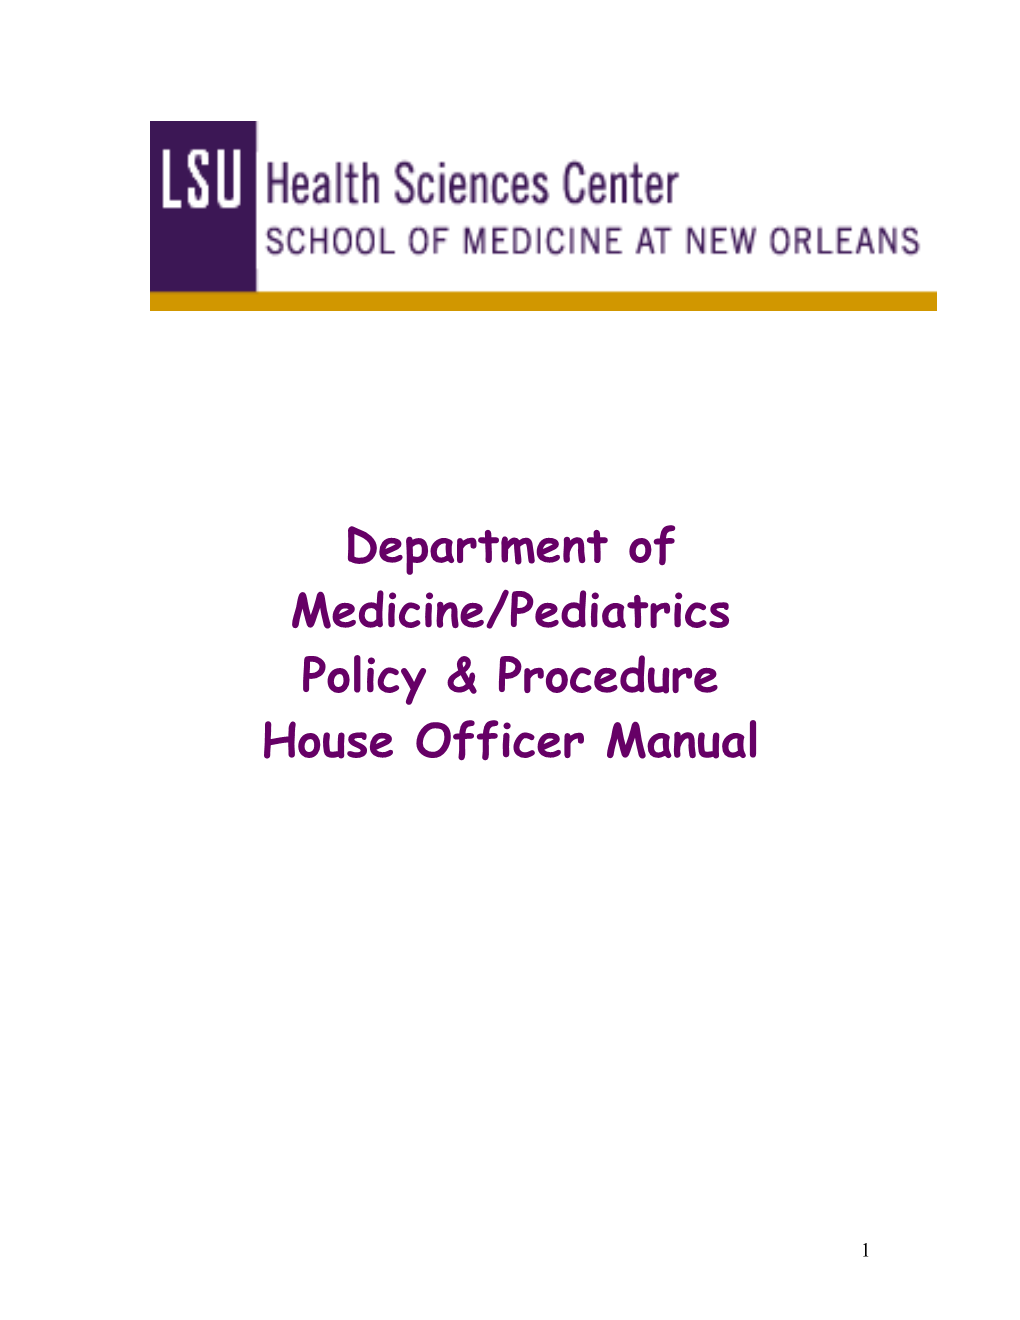 LSU Medicine/Pediatrics